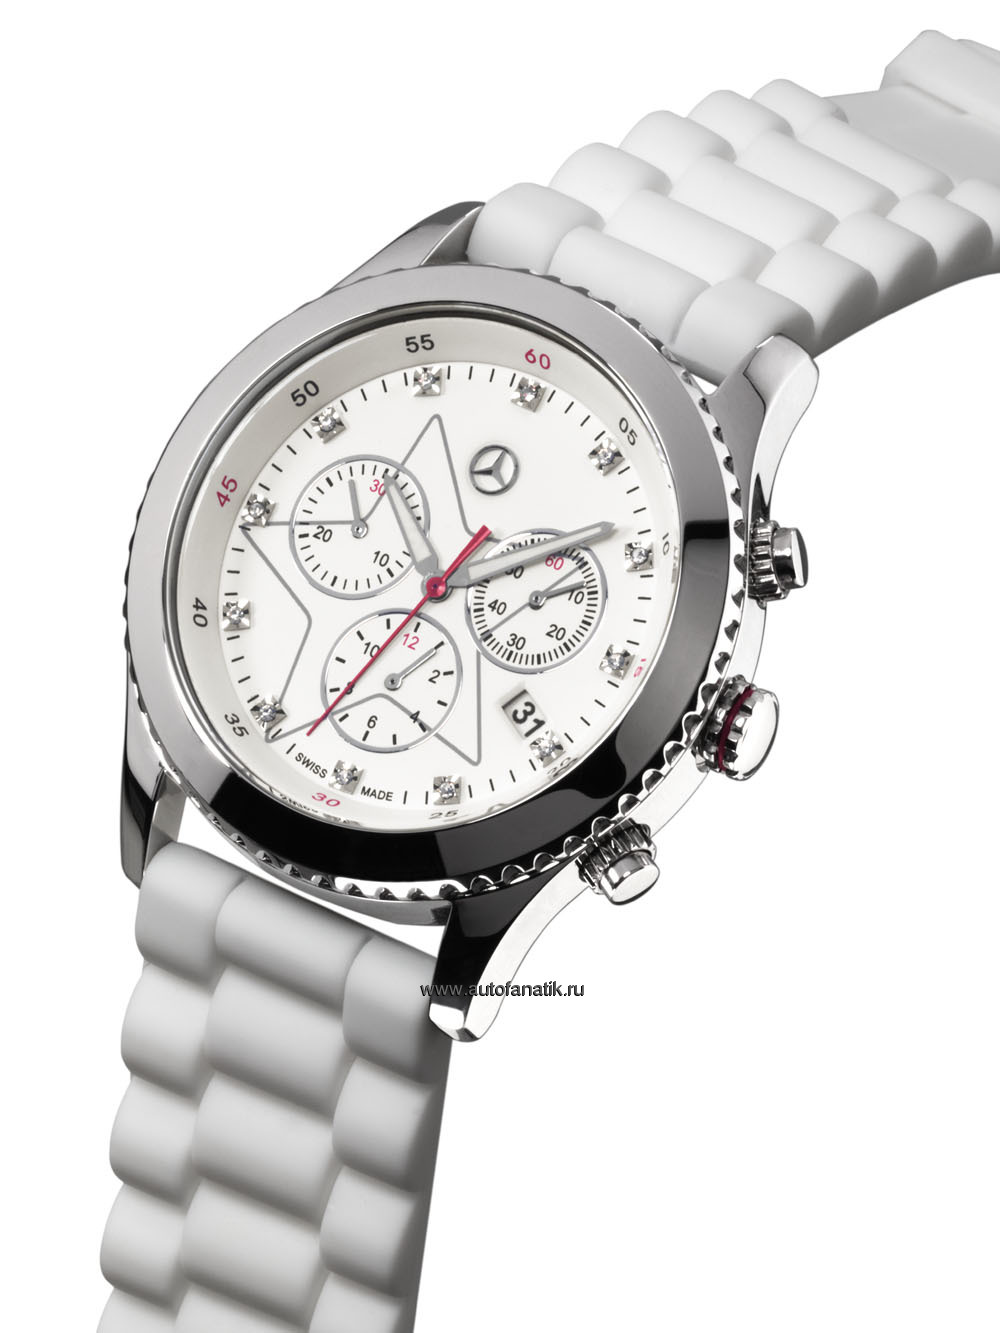 Mercedes benz stainless steel watch